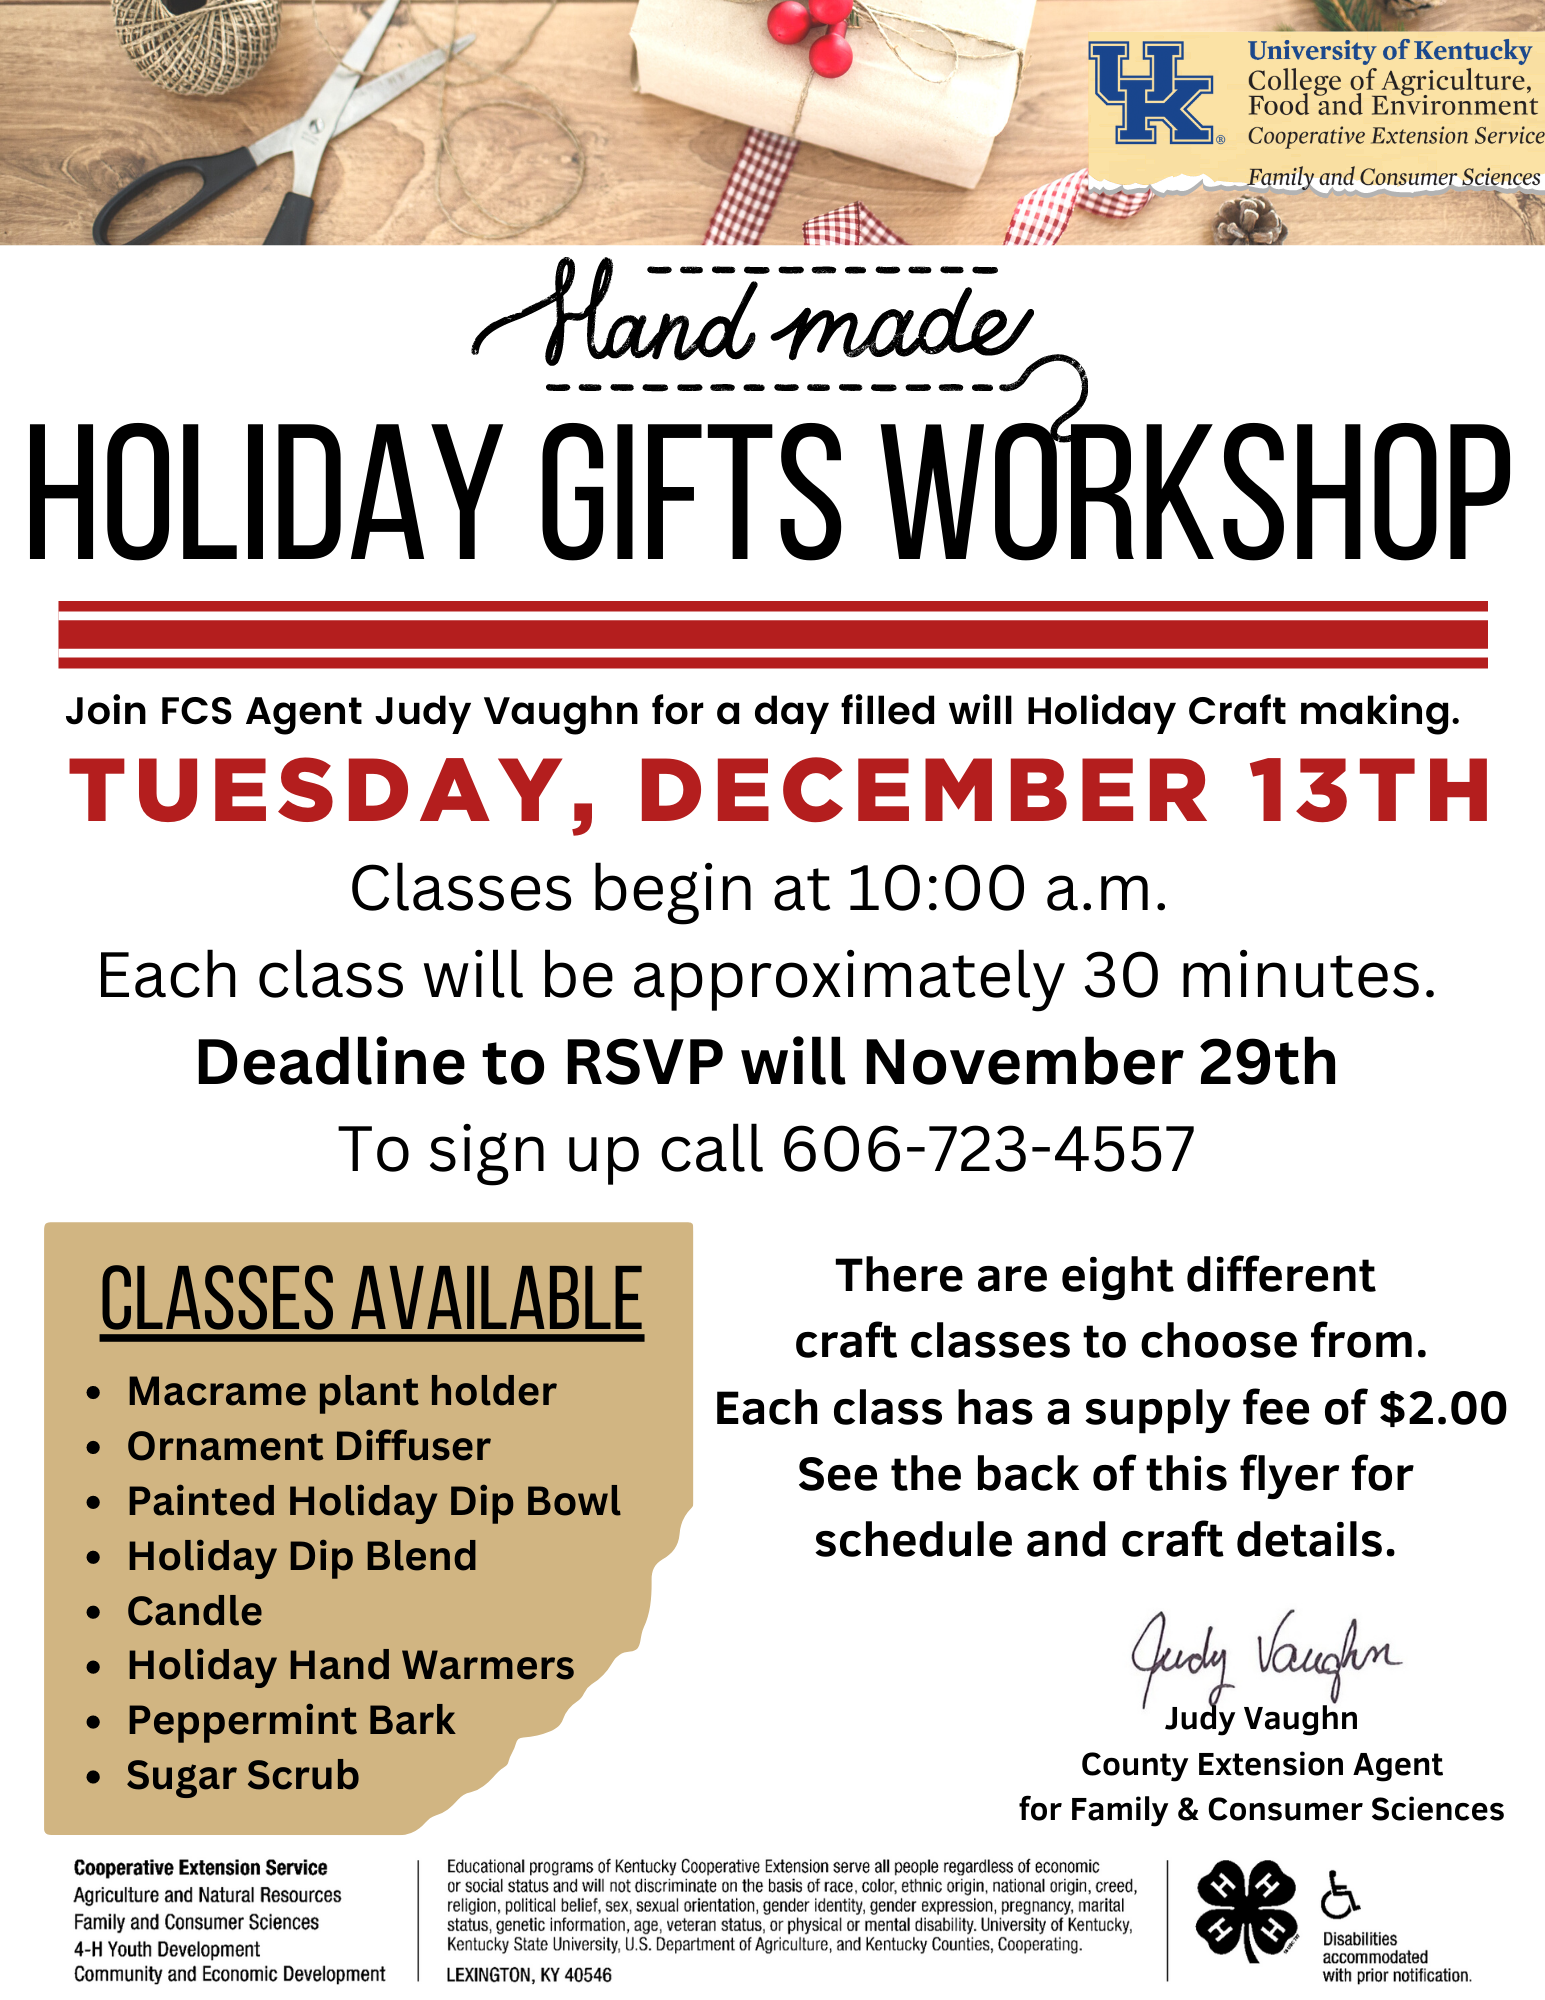 Handmade holiday gifts workshop event flyer